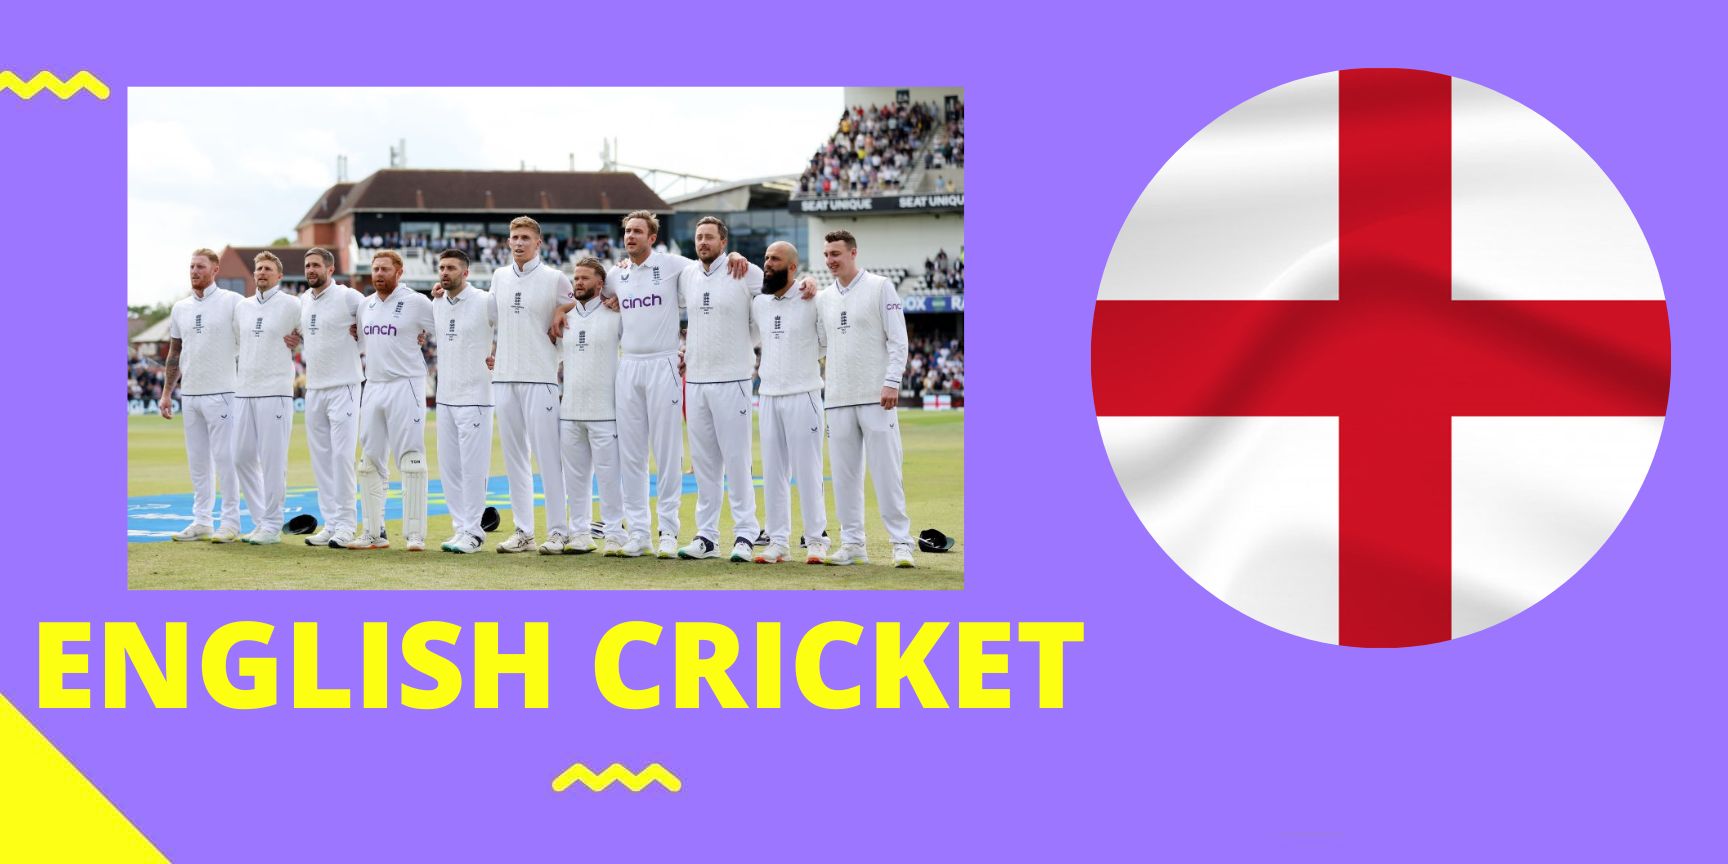 English Cricket: a short info